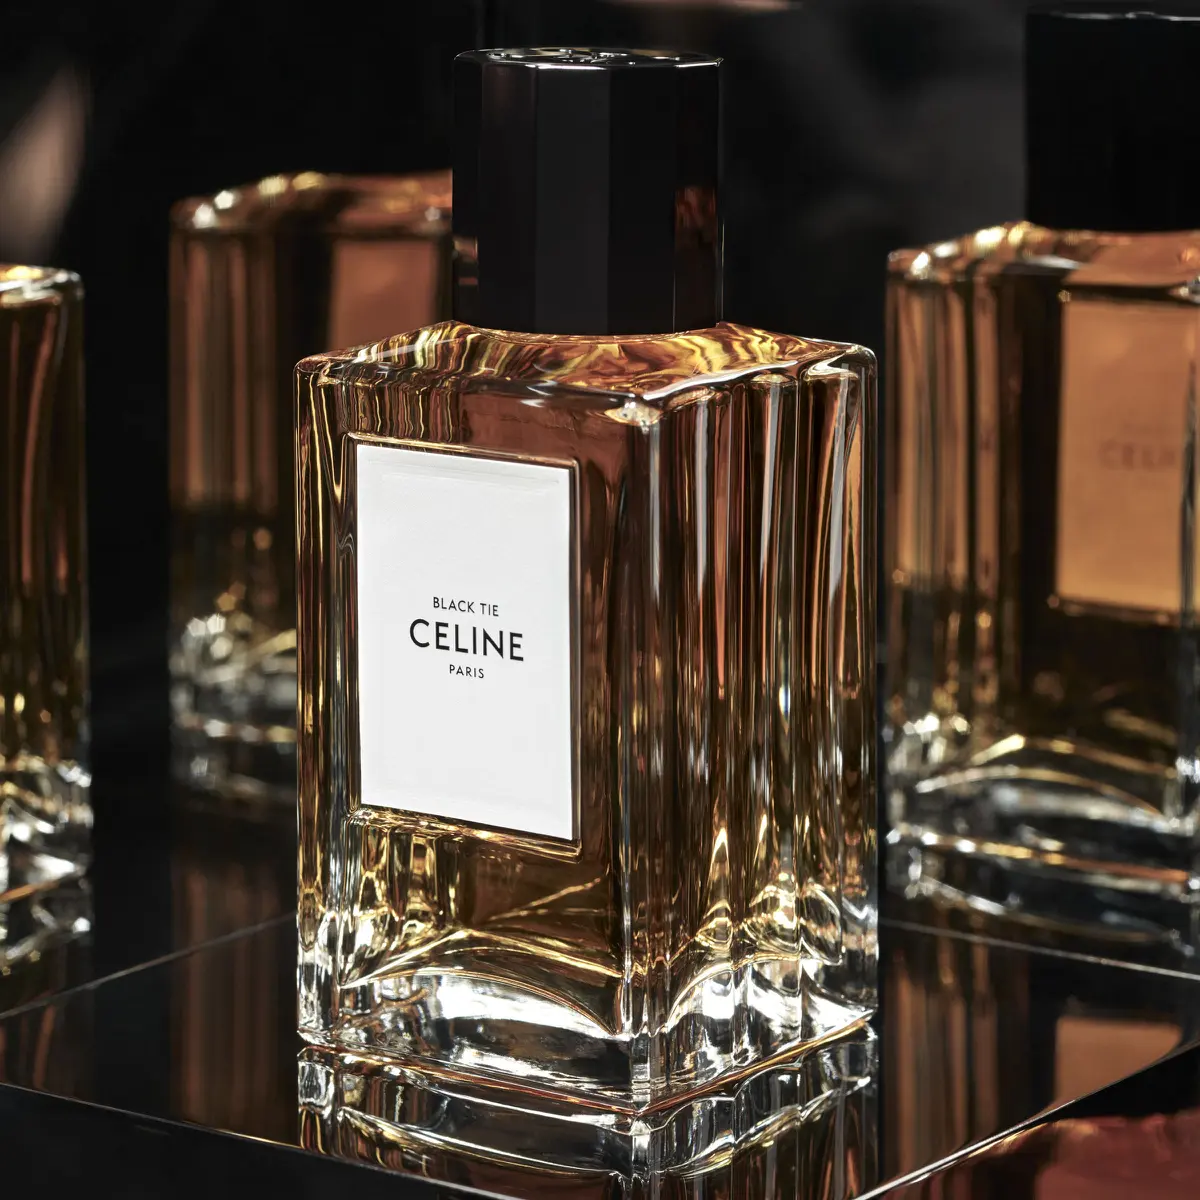 Parfum Louis Vuitton Spell On You Wewangian untuk Perempuan Romantis  Sekaligus Penakluk - Beauty